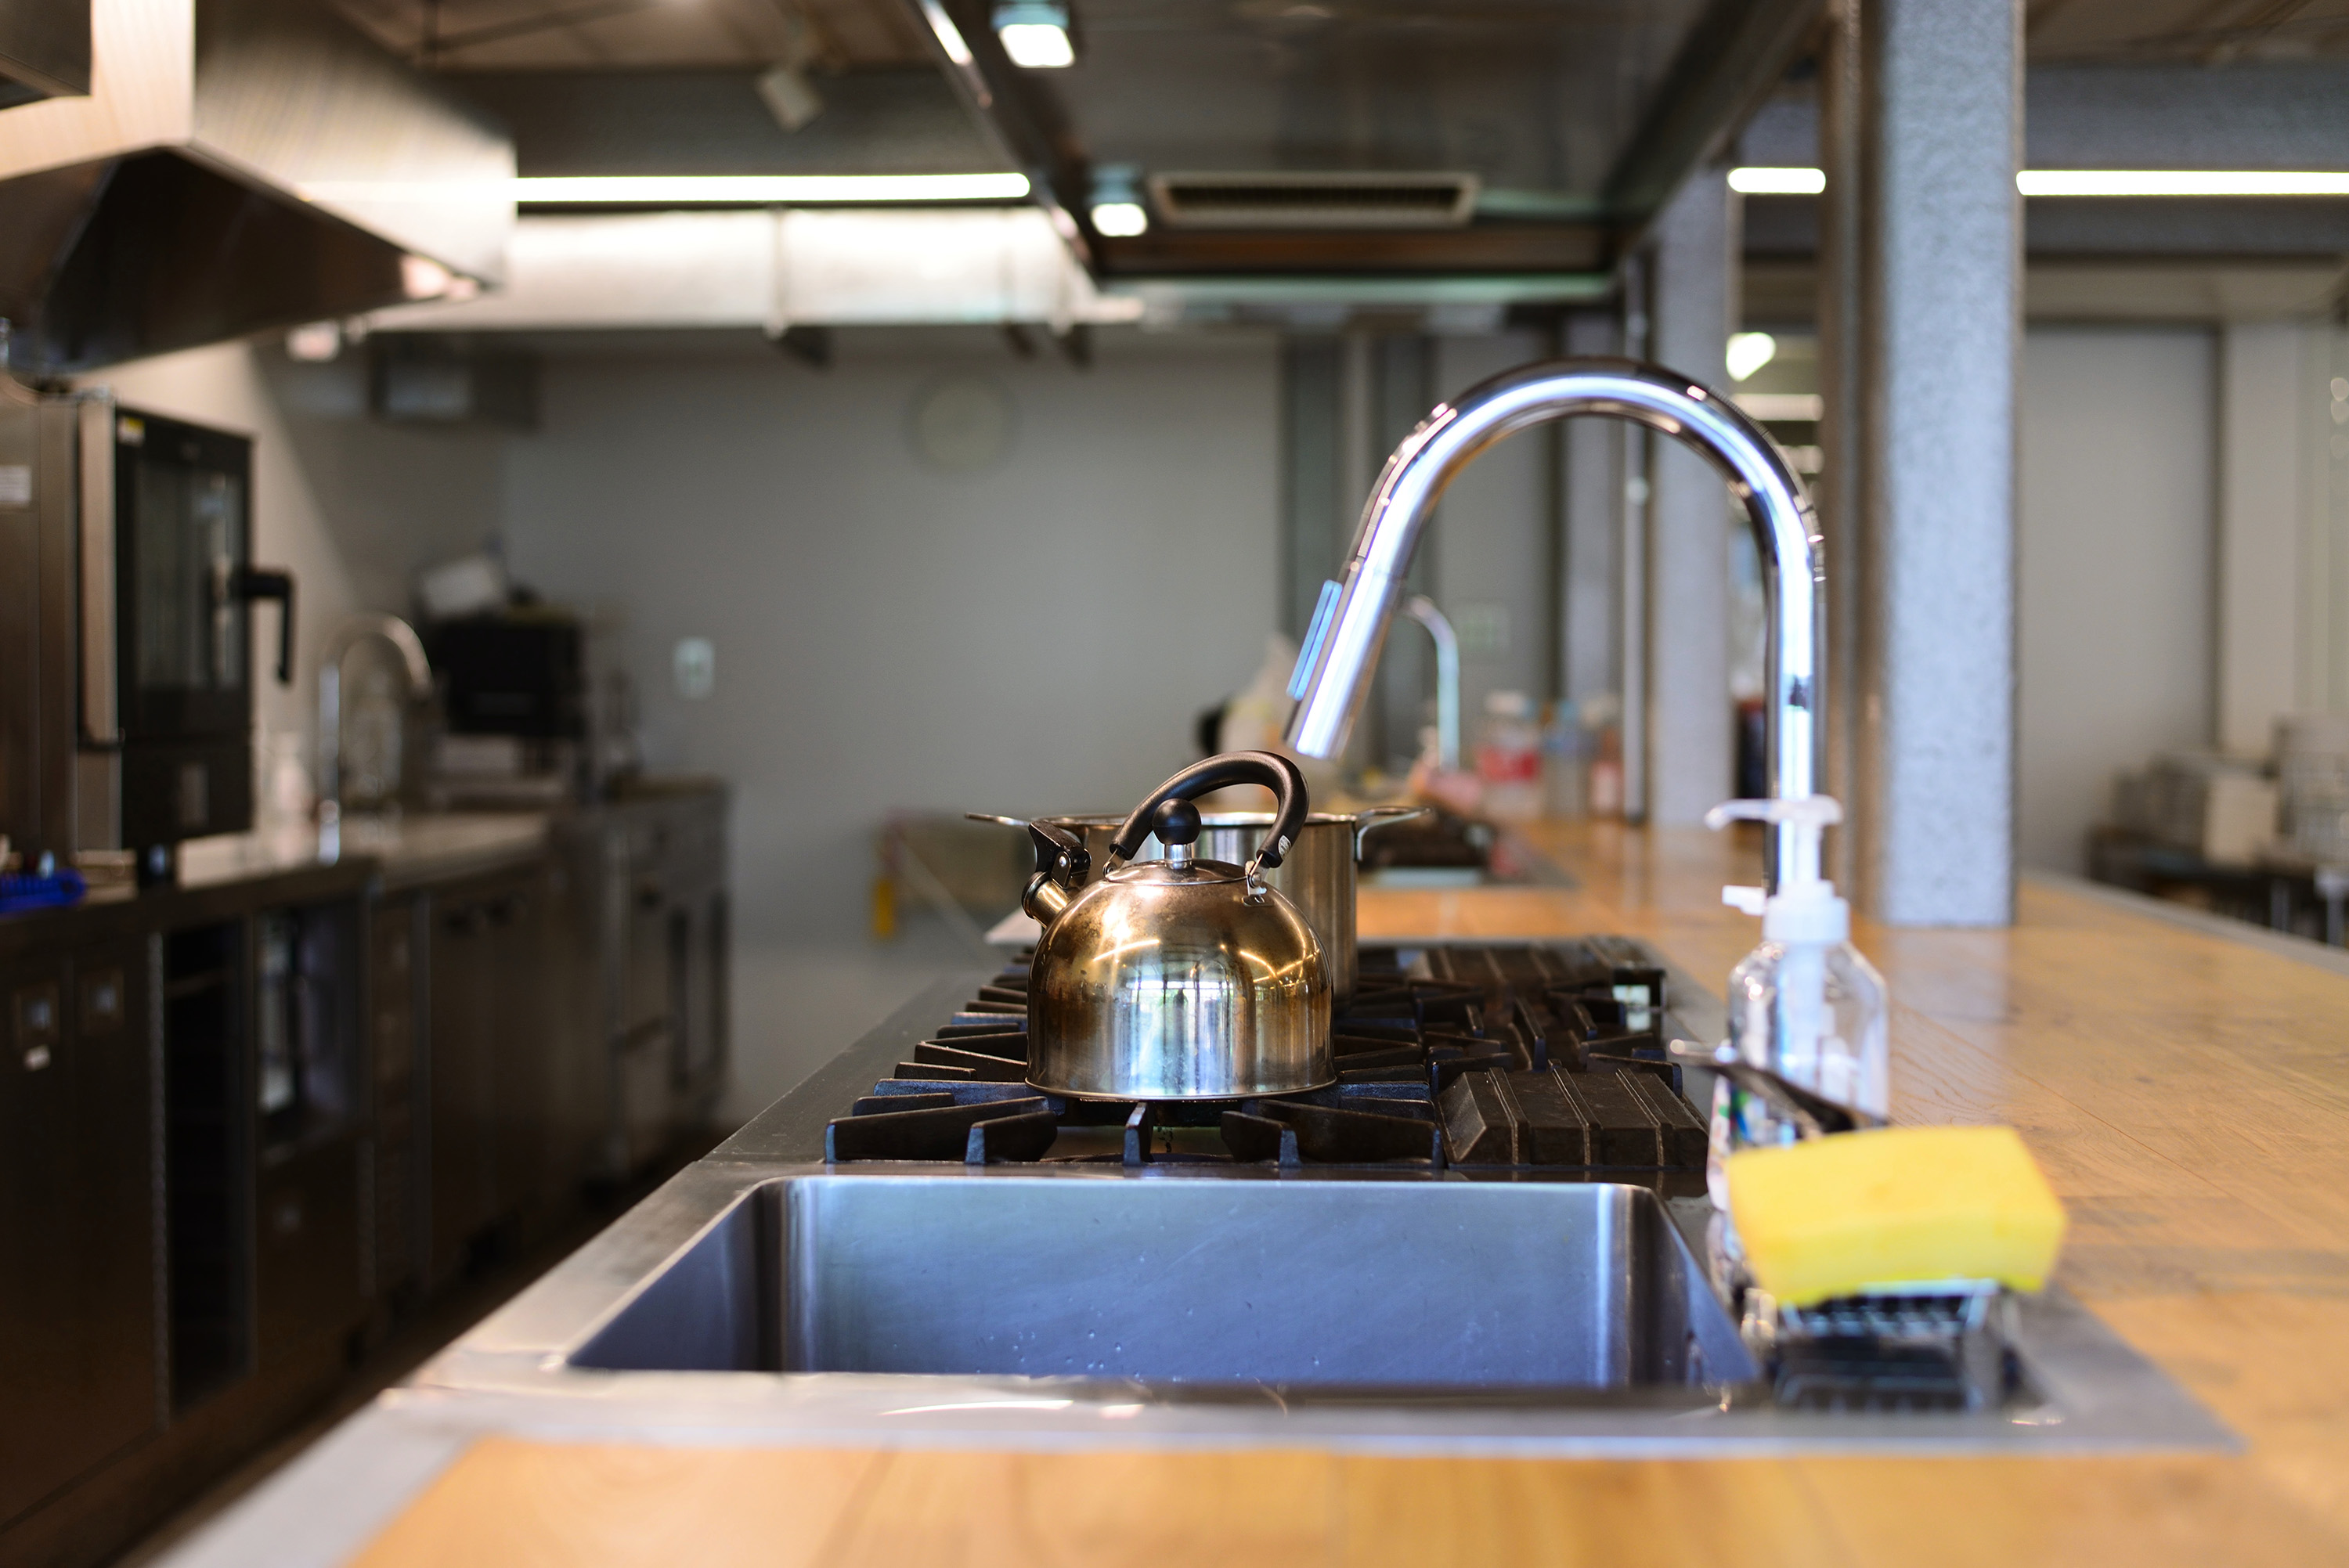 Communal kitchen at coworking space - warewashing products